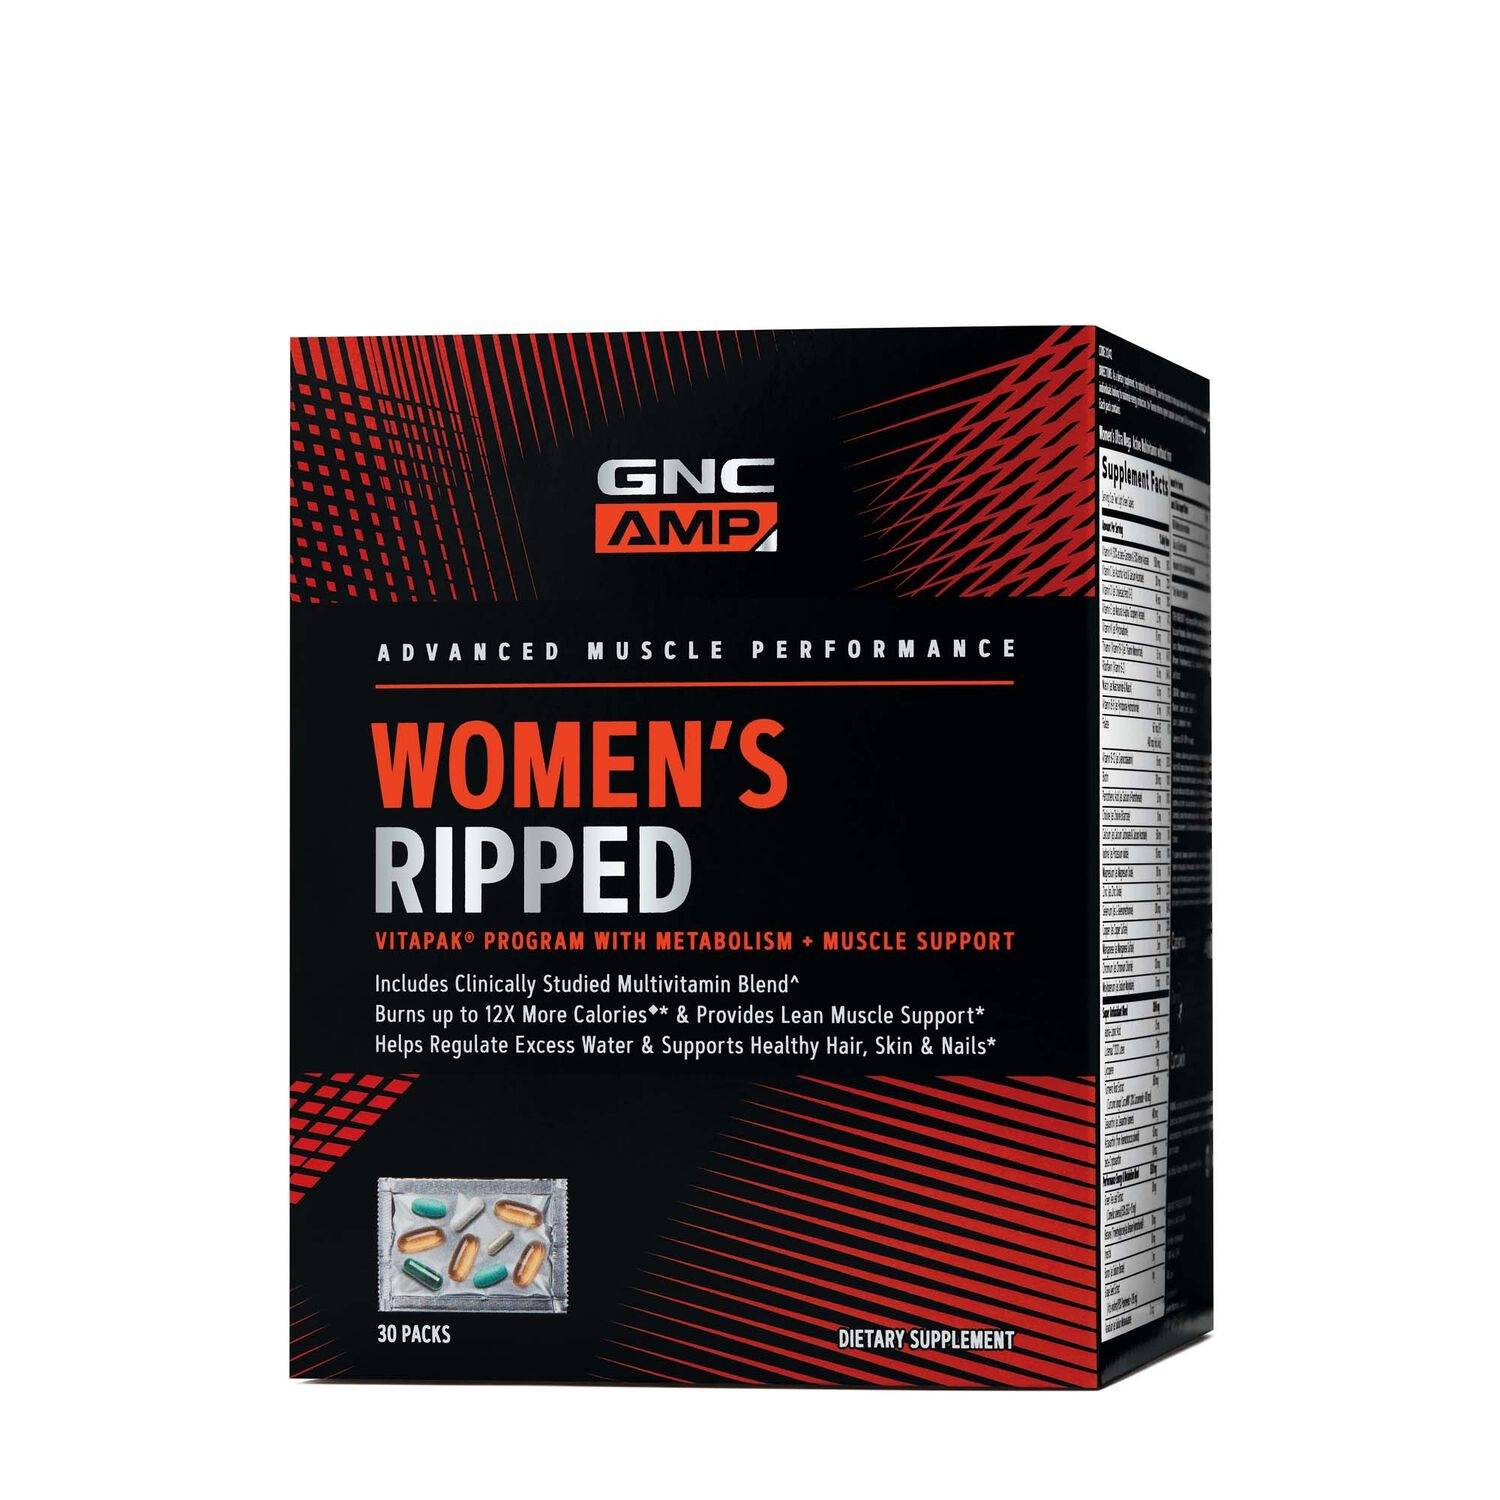 Complex De Multivitamine Pentru Femei, Women’s Ripped Program Vitapak 30 Pachetele - GNC